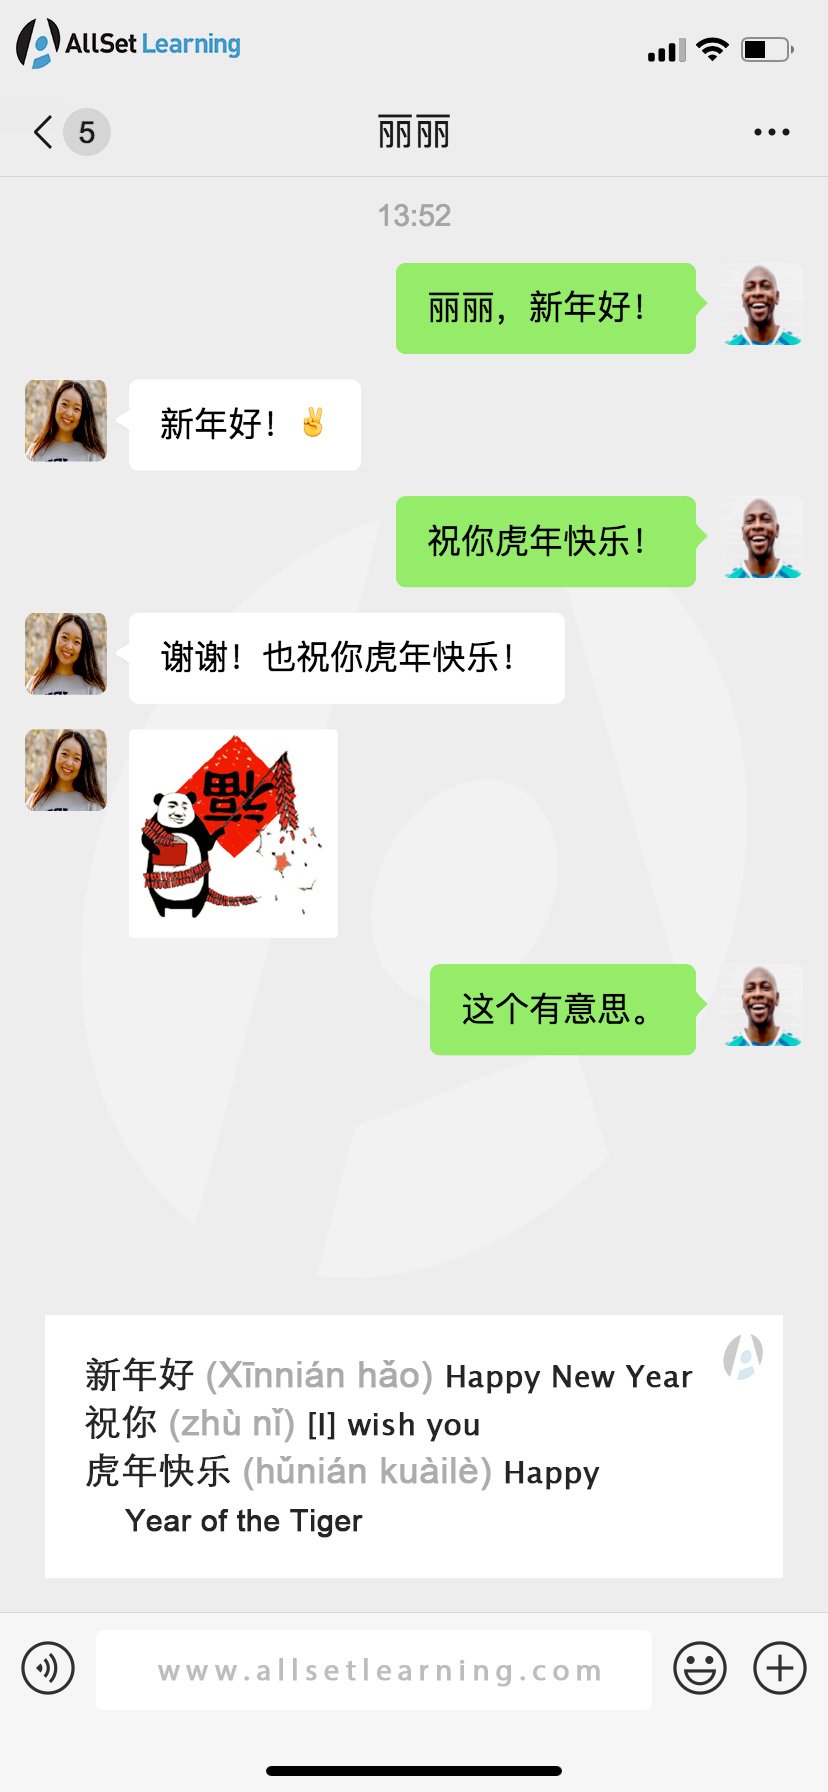 中文微信祝福对话，轻松应对春节祝福— AllSet Learning image